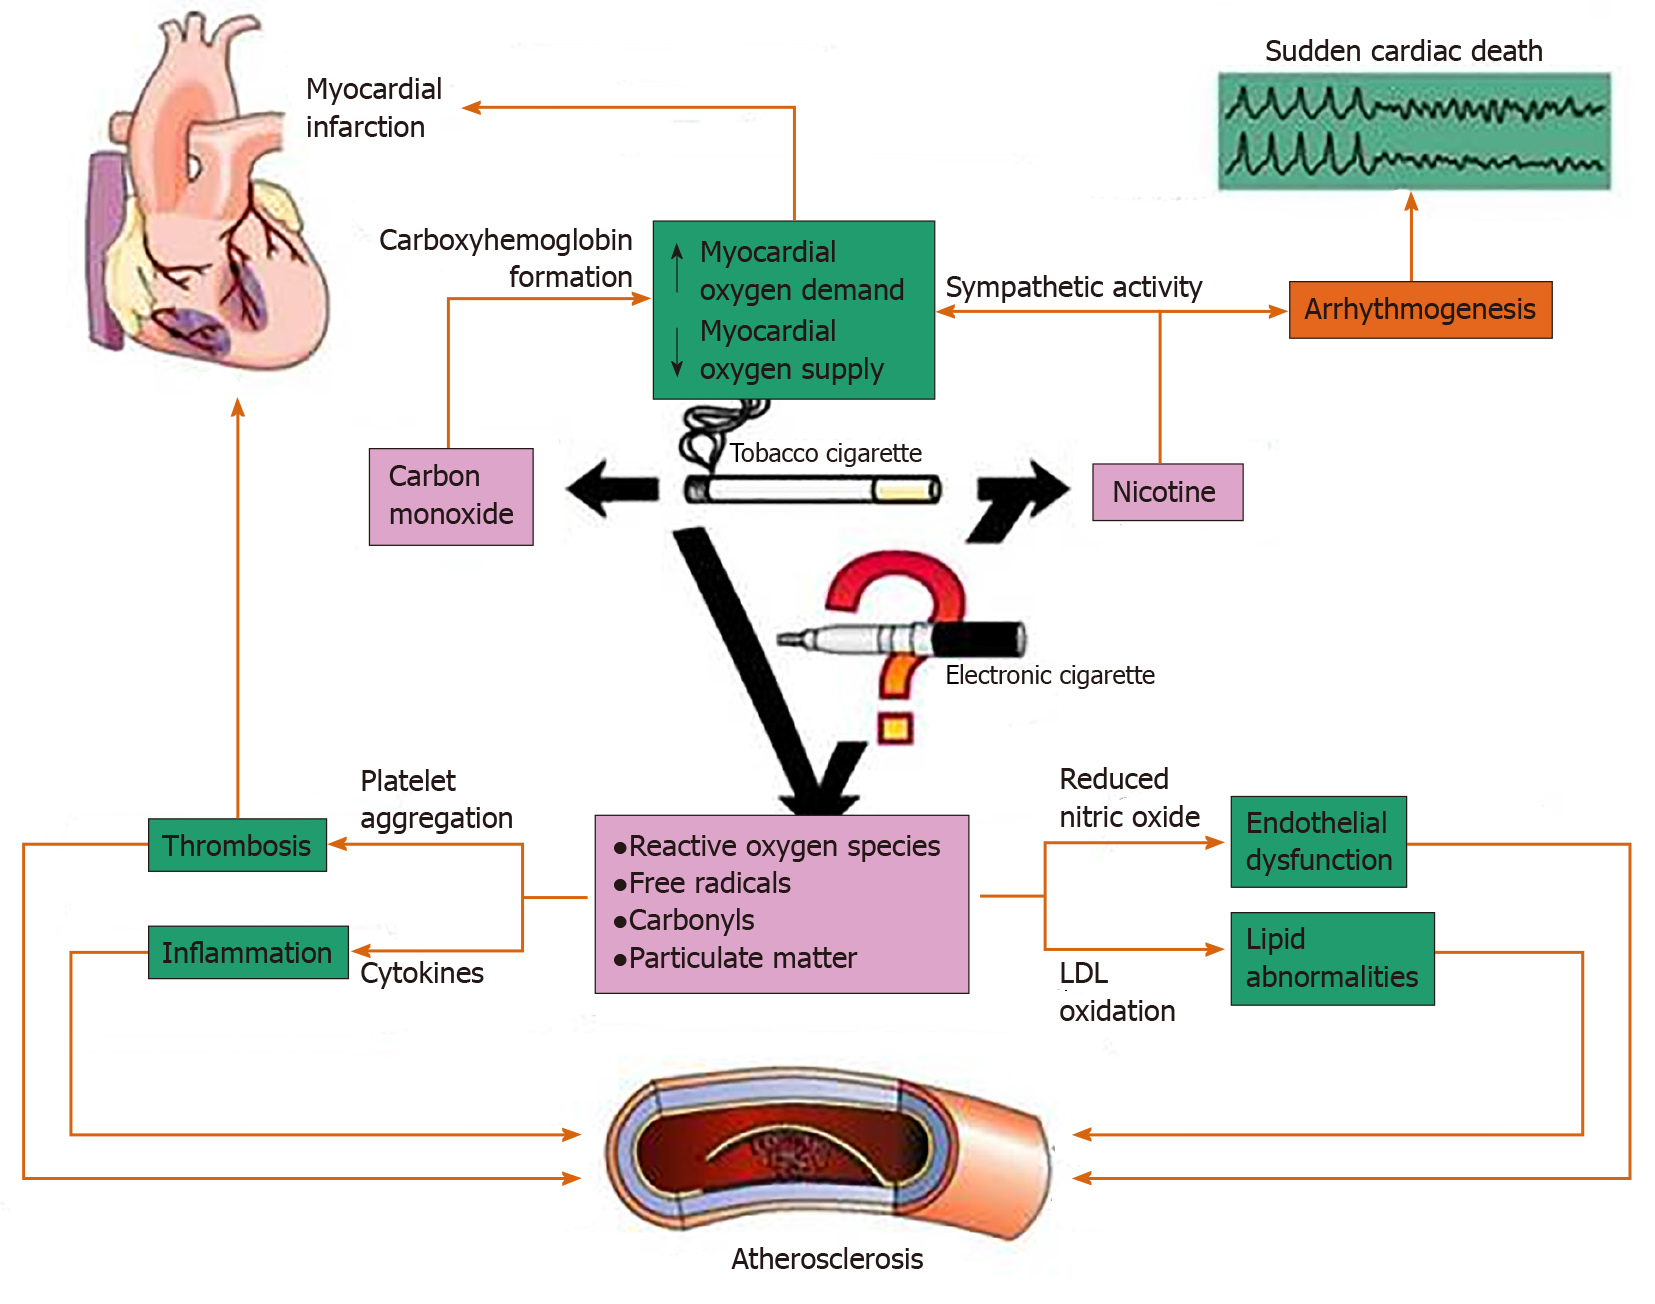 Active Tobacco Smoking Impairs Cardiac Systolic Function